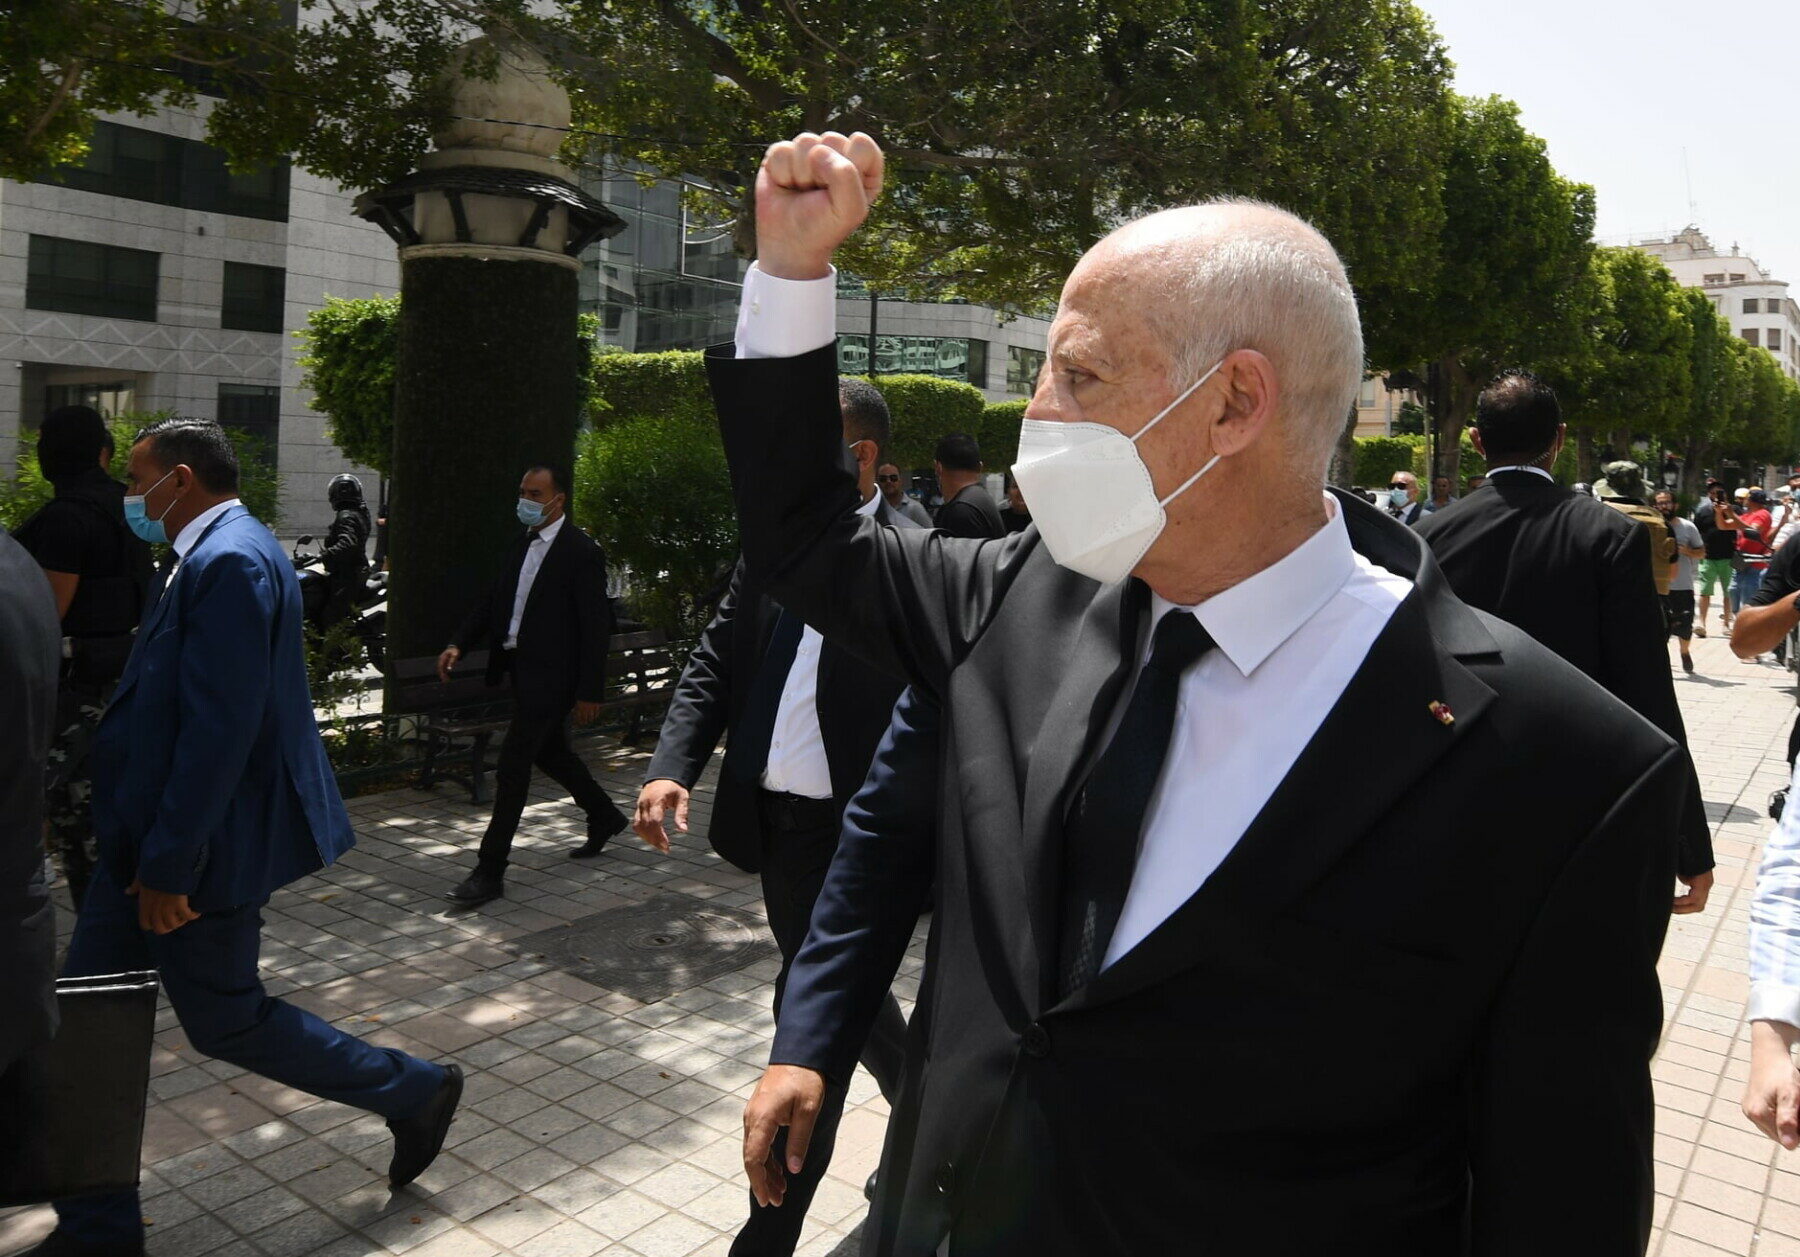 O Kais Saied διακρίνεται σε φωτογραφίες να περπατά την 1η Αυγούστου, λίγες ημέρες αφότου ανέτρεψε το πολίτευμα και να χαιρετά οπαδούς του © EPA/PRESIDENCY OF TUNISIA HANDOUT HANDOUT EDITORIAL USE ONLY/NO SALES